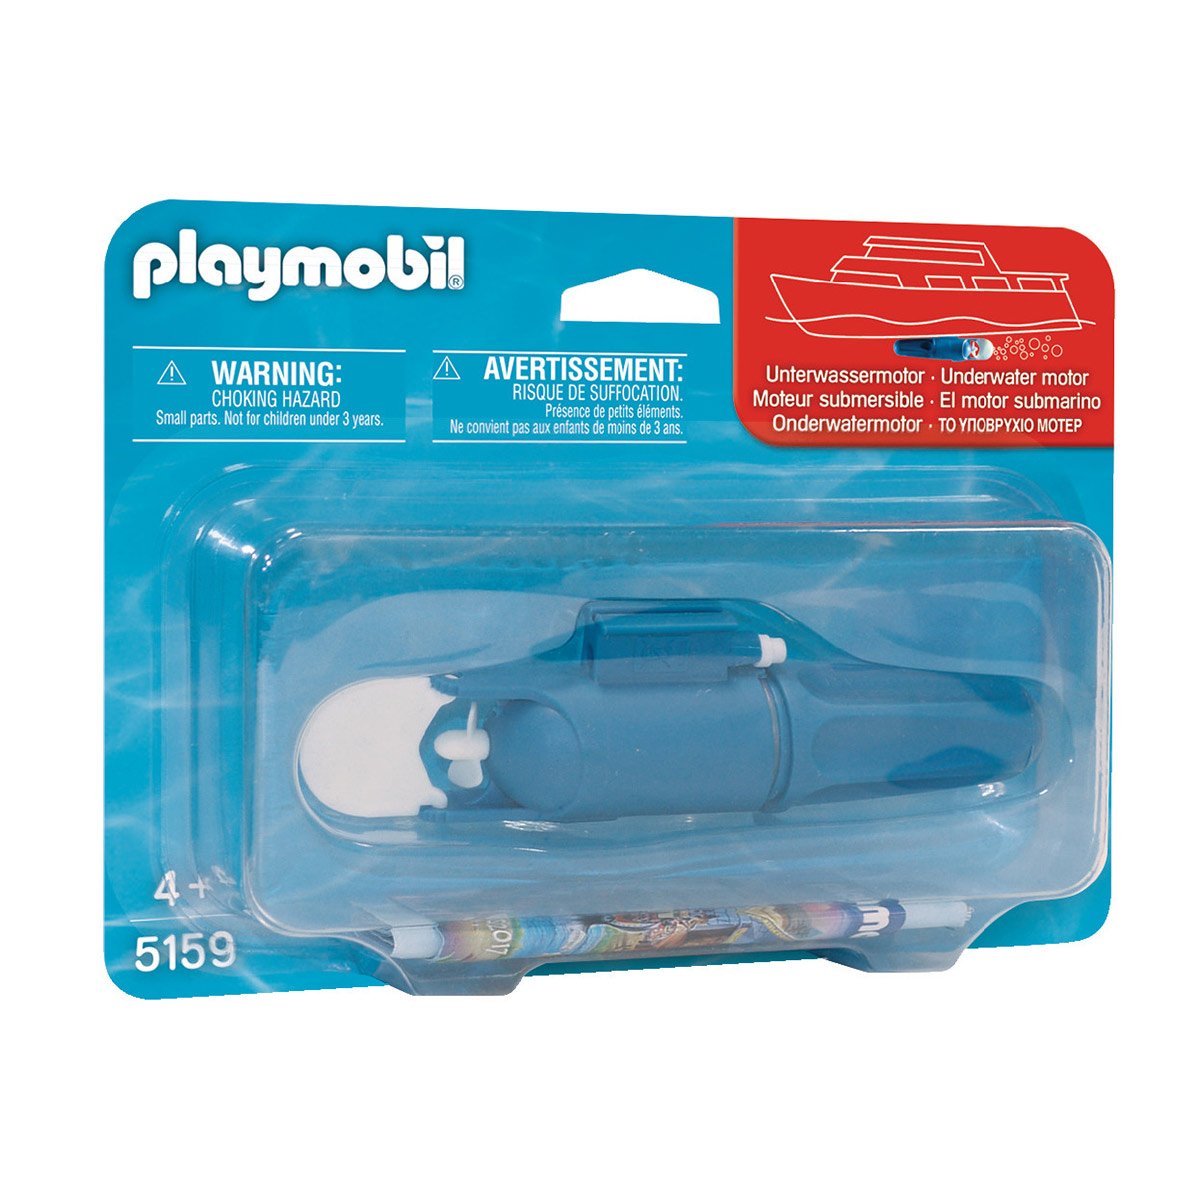 playmobil 7350 or 5159